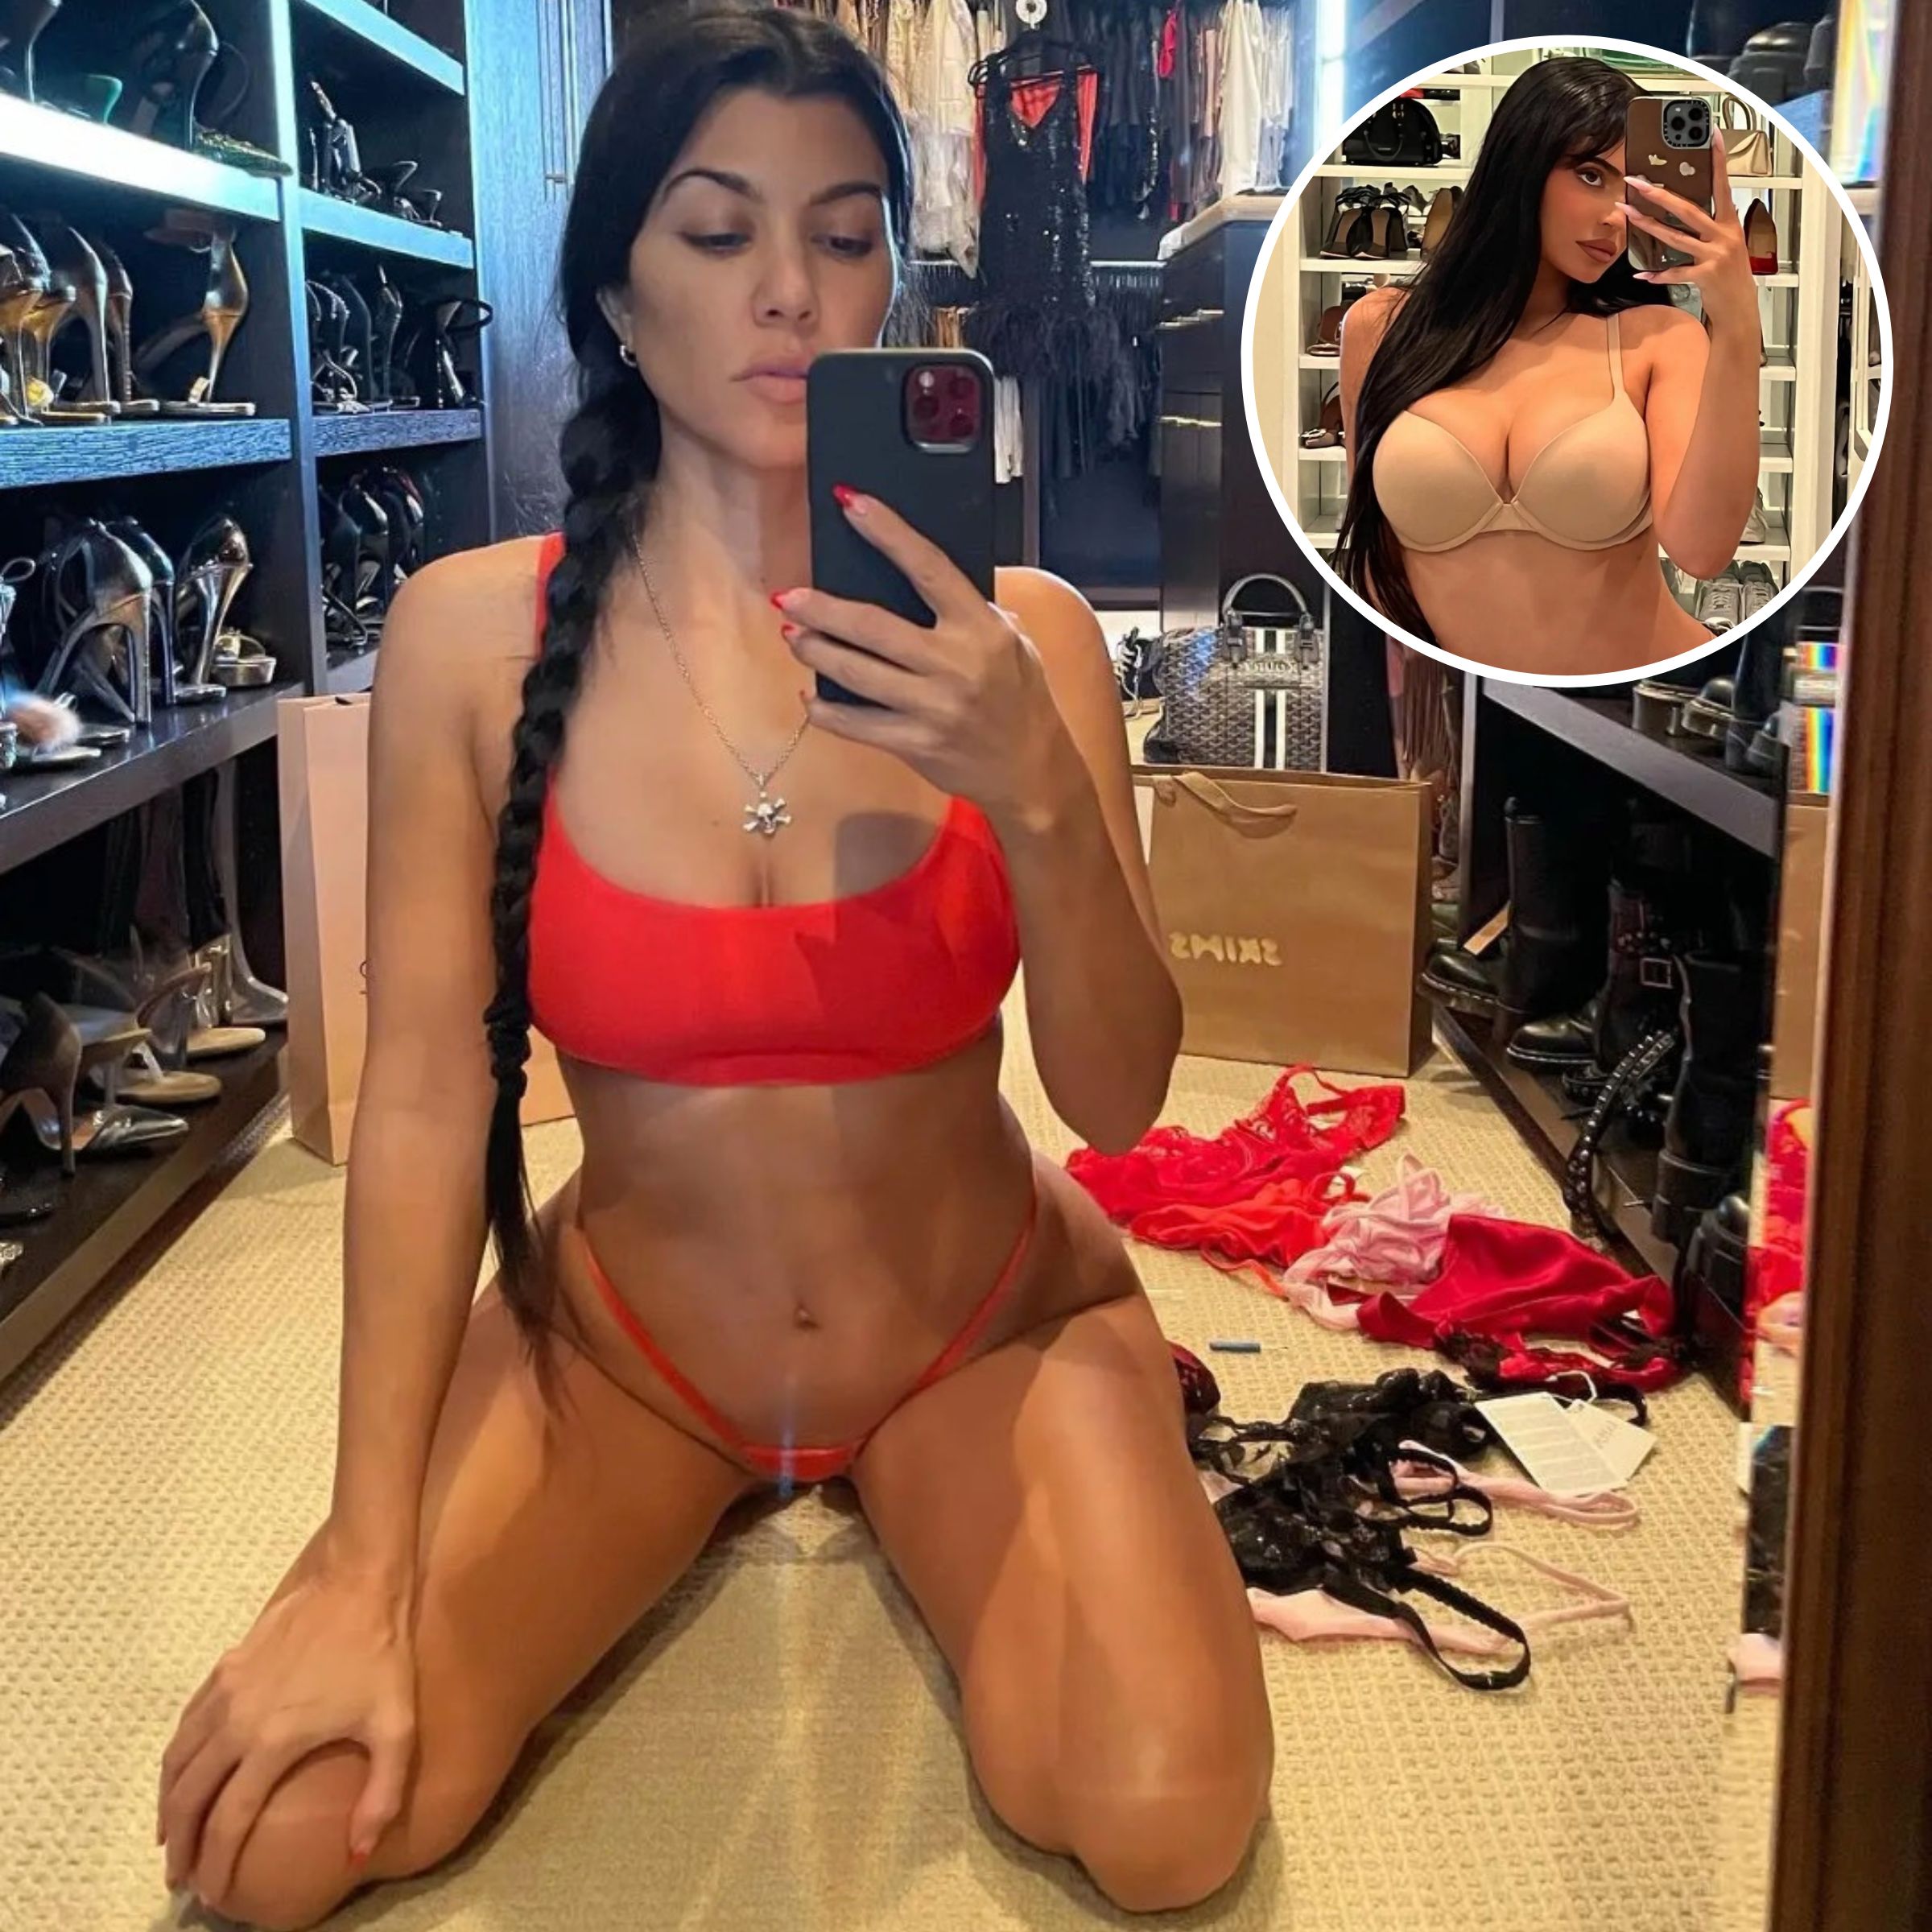 Sister Dressed Undressed Porn Captions - Kardashian-Jenner Sisters Underwear Photos: Bras, Panties